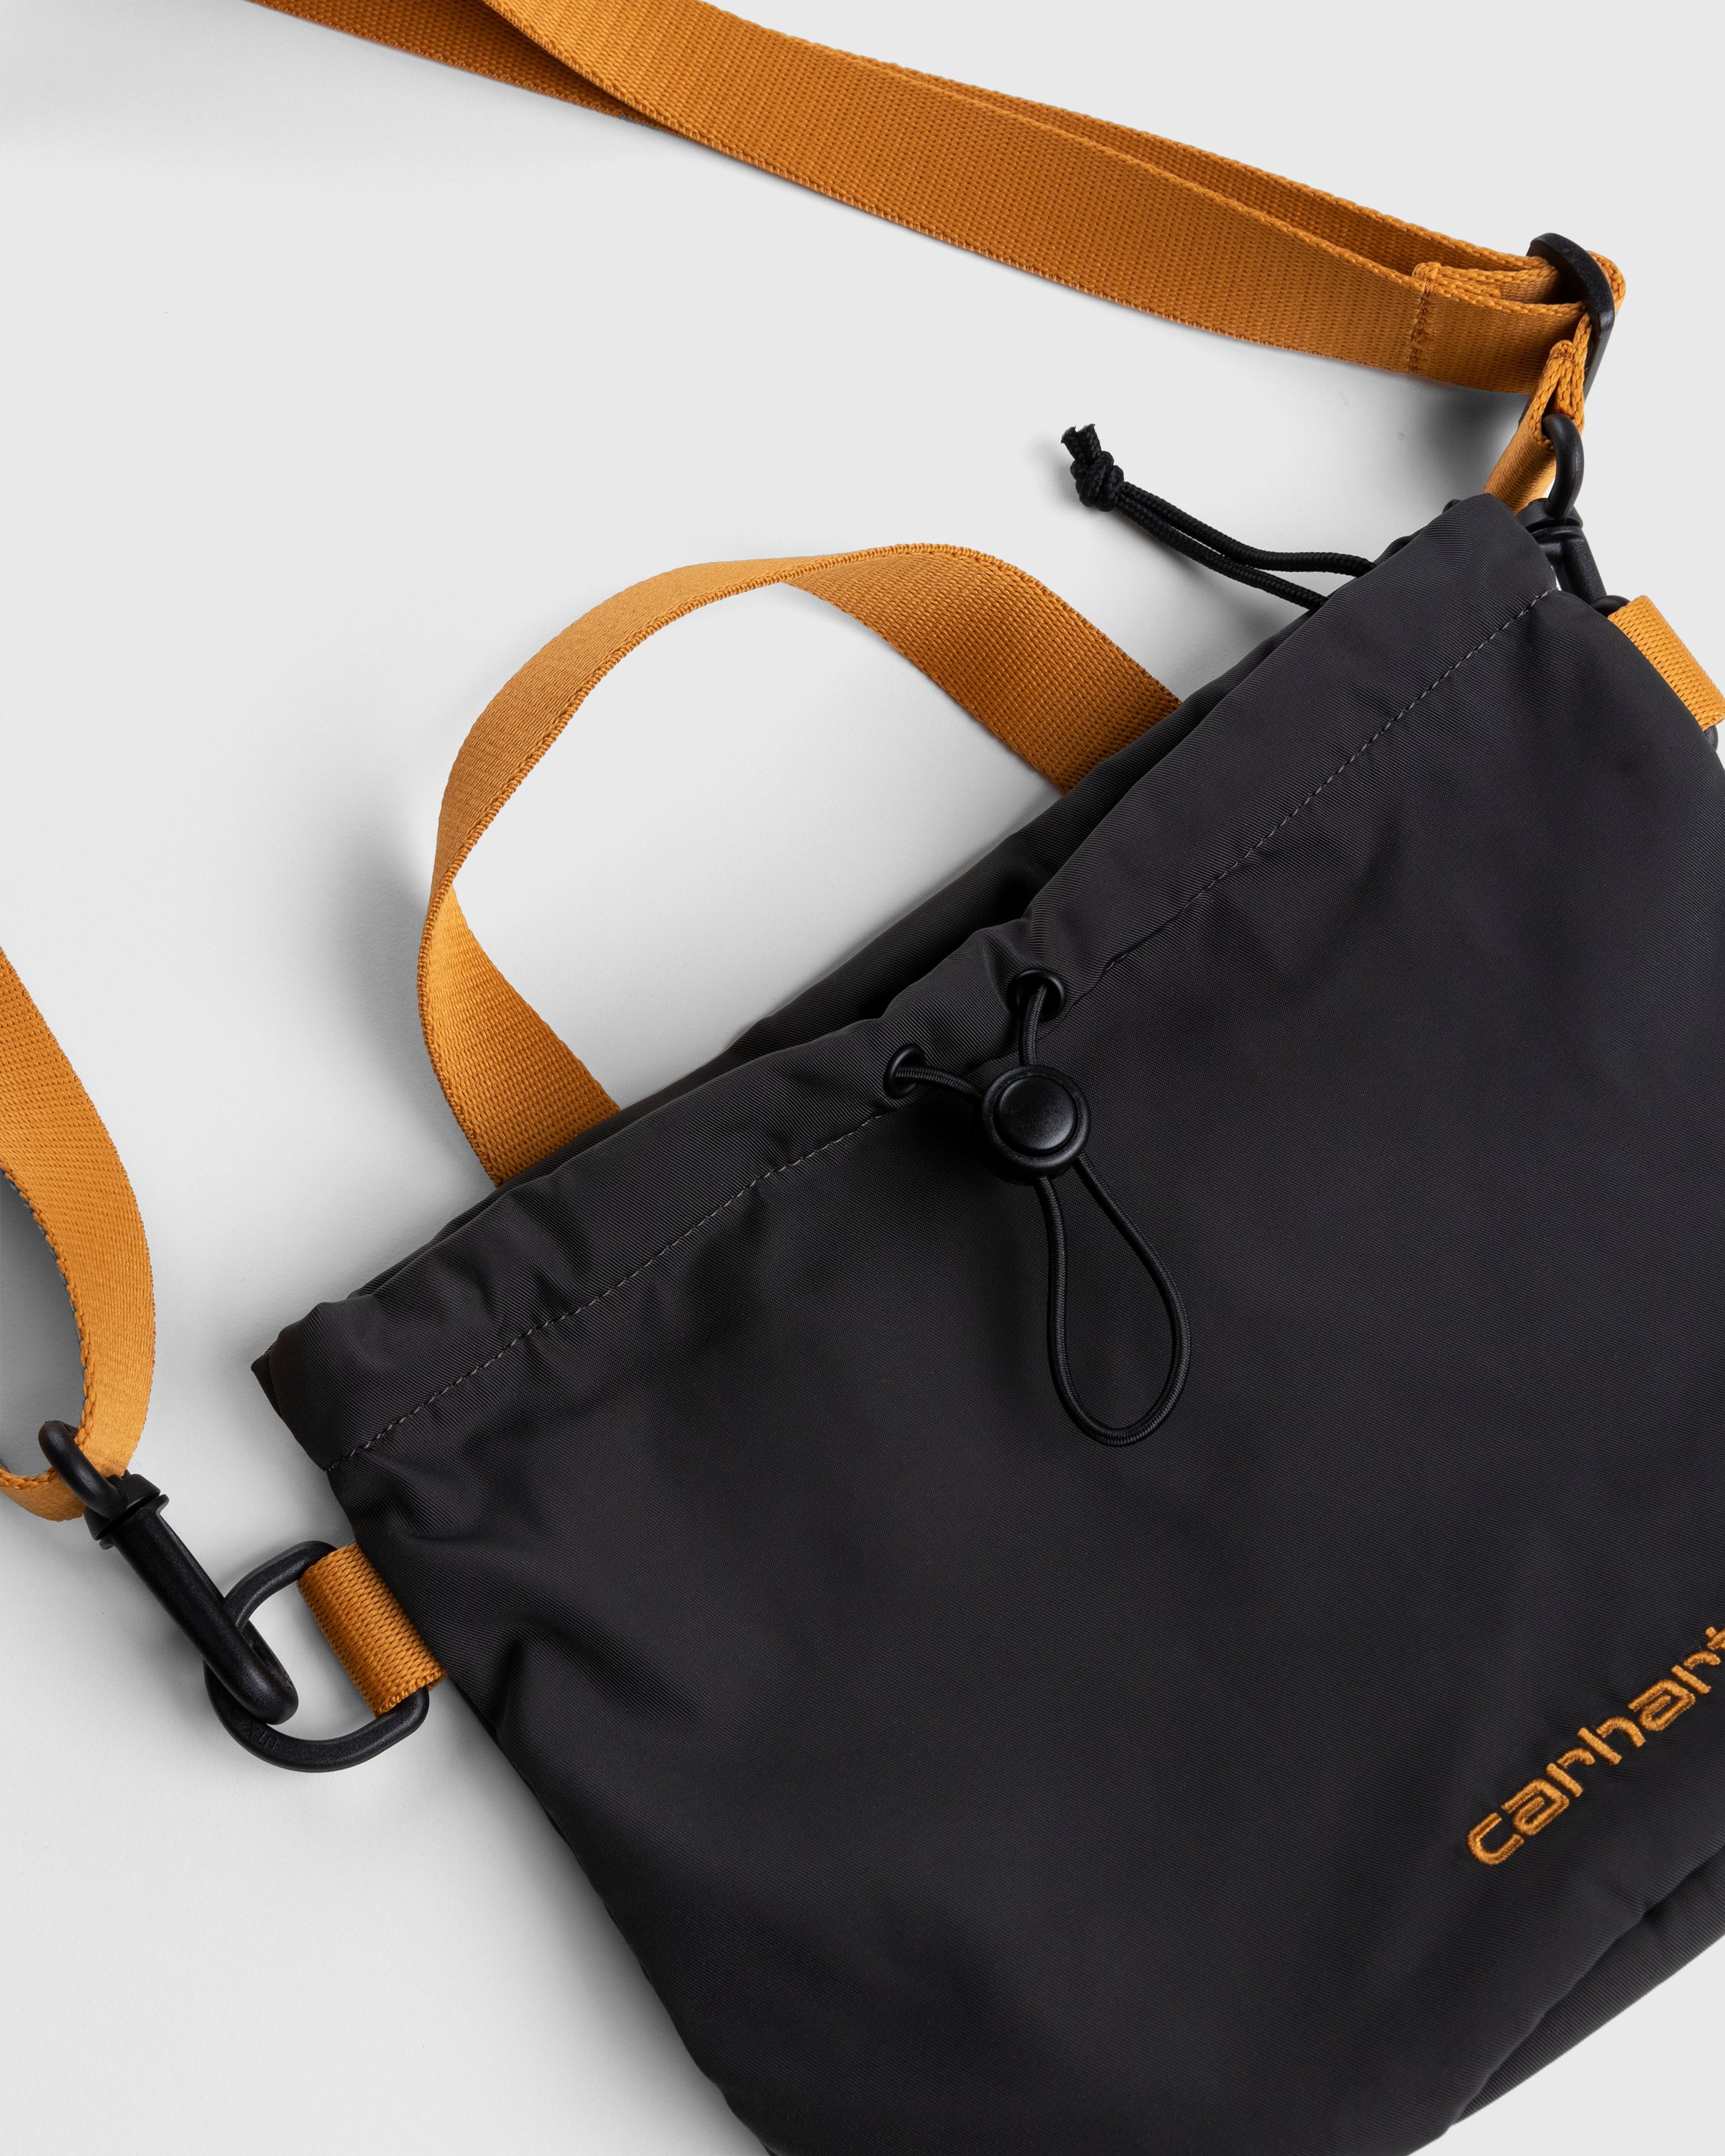 Carhartt WIP - Bayshore Small Bag Vulcan - Accessories - Black - Image 4